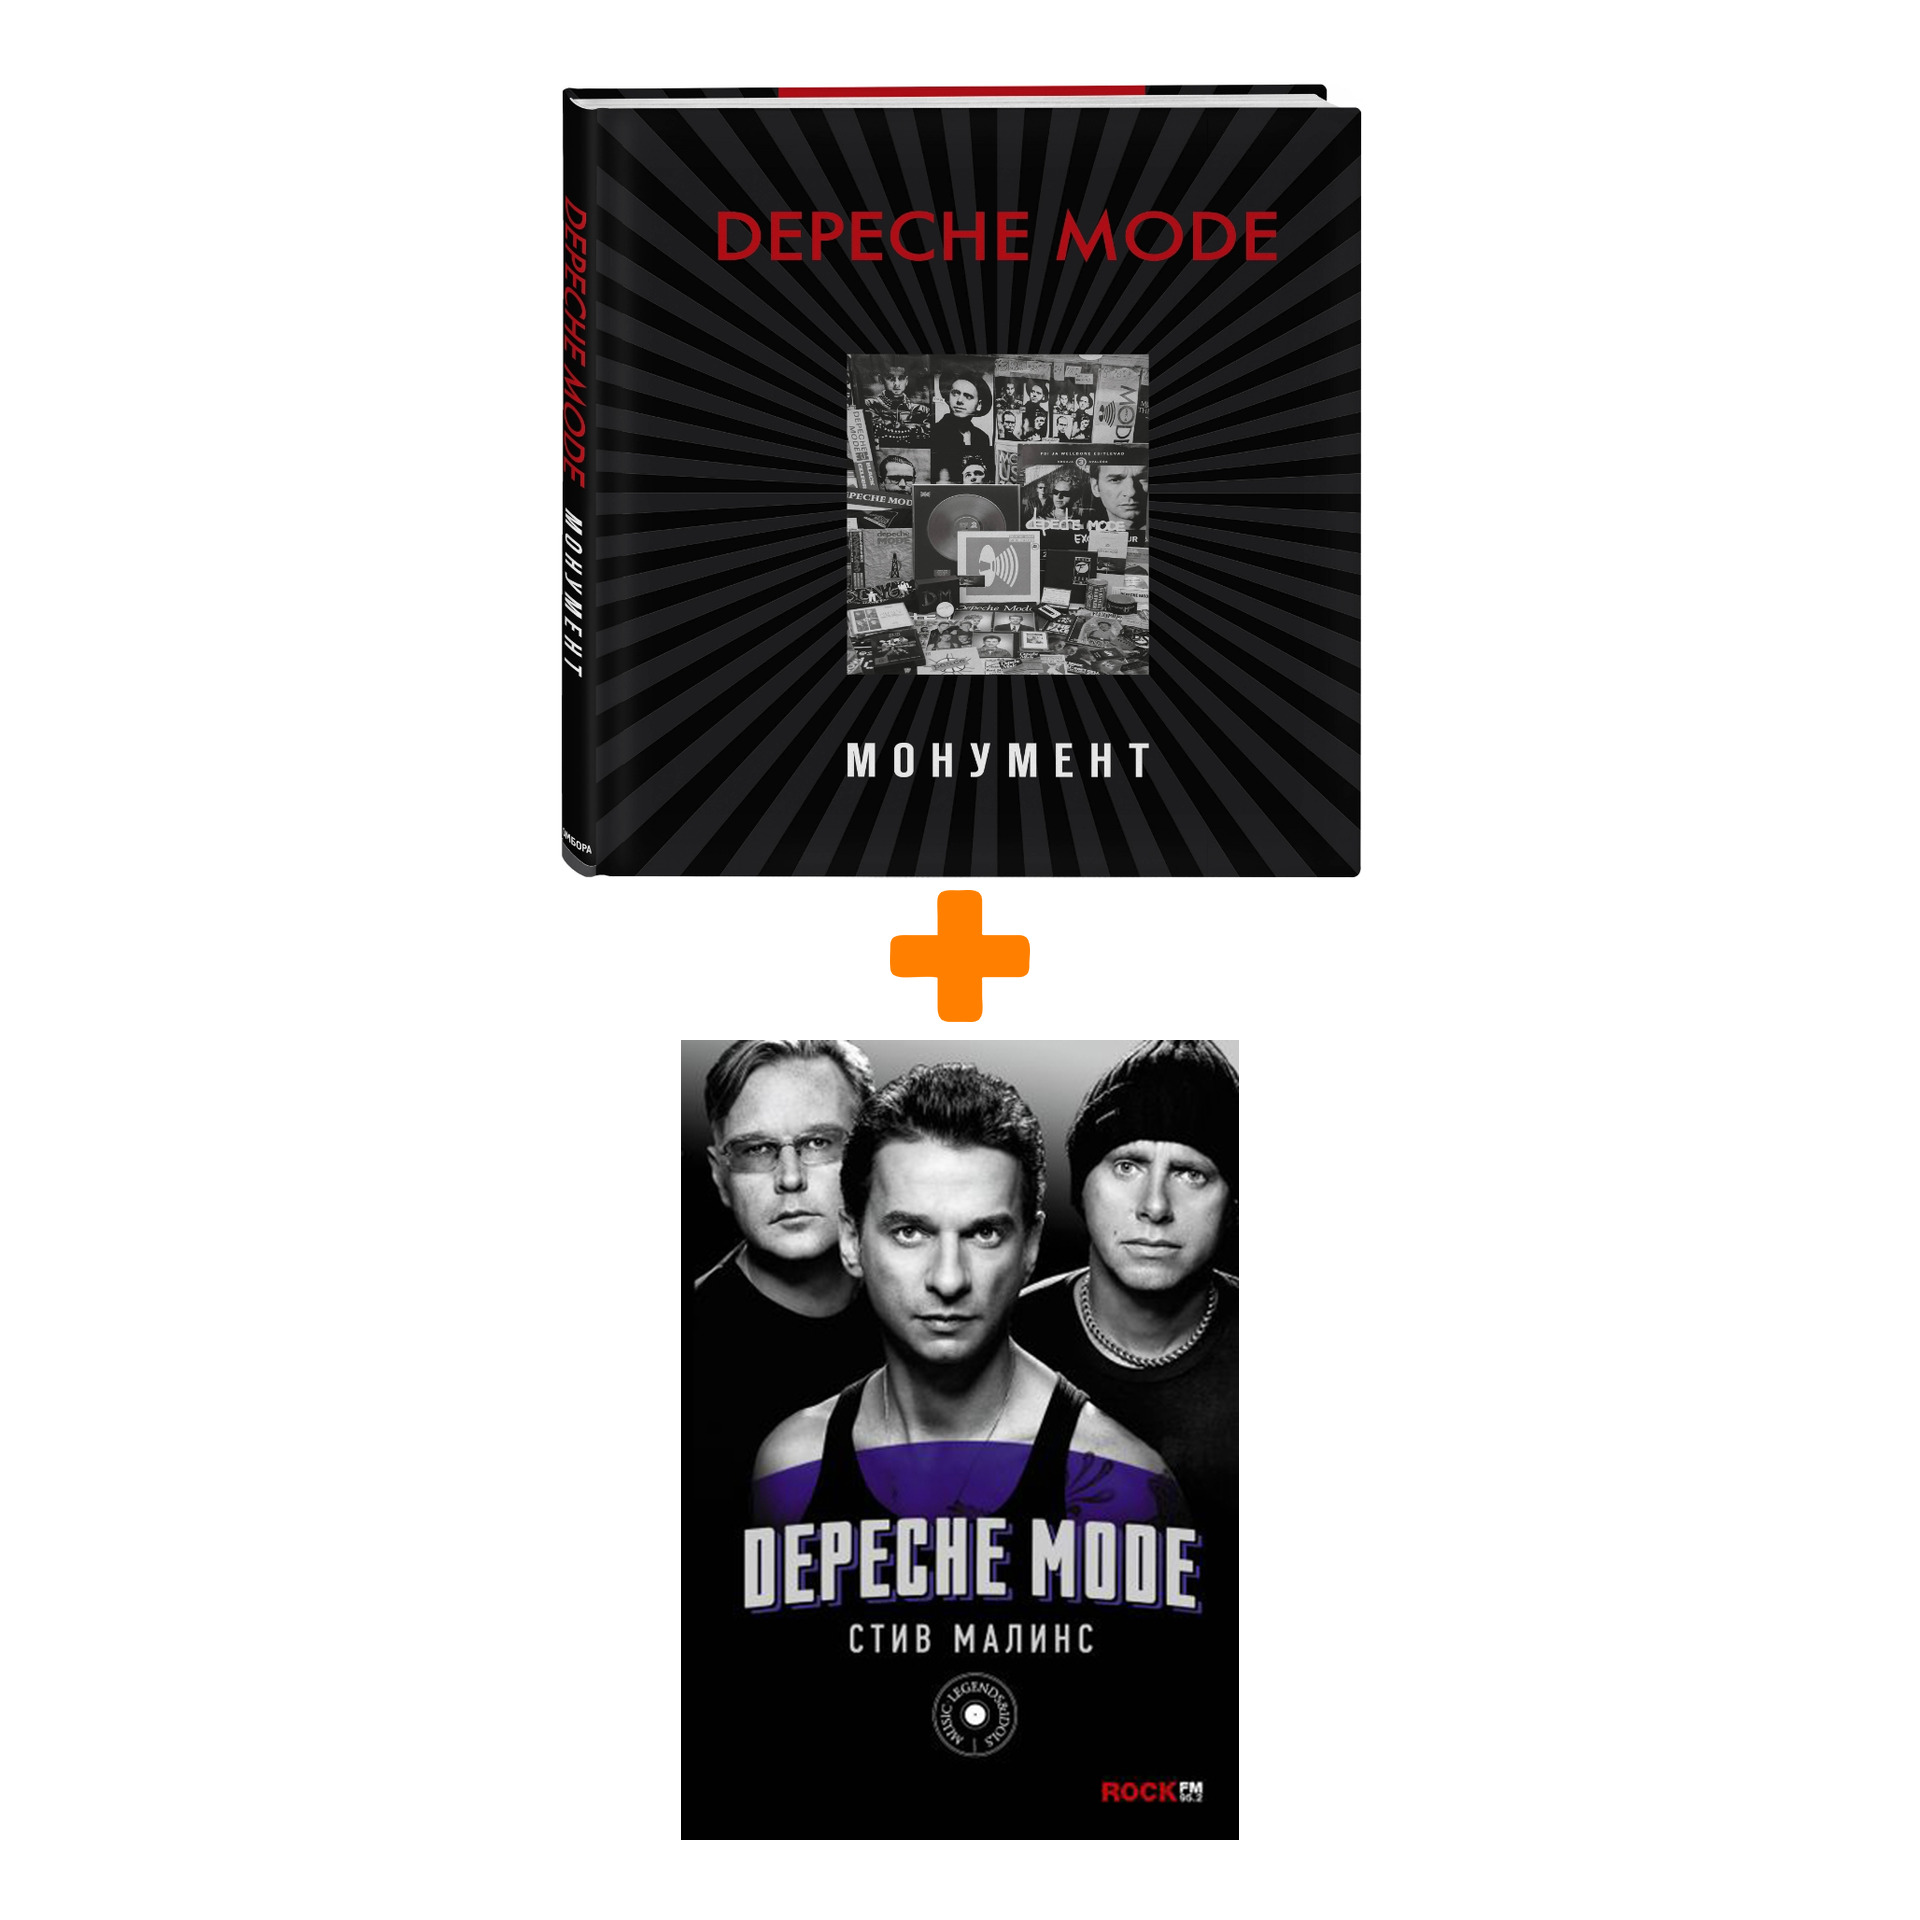 Depeche Mode: Монумент (новая редакция) + Depeche Mode: Стив Малинс. Комплект книг